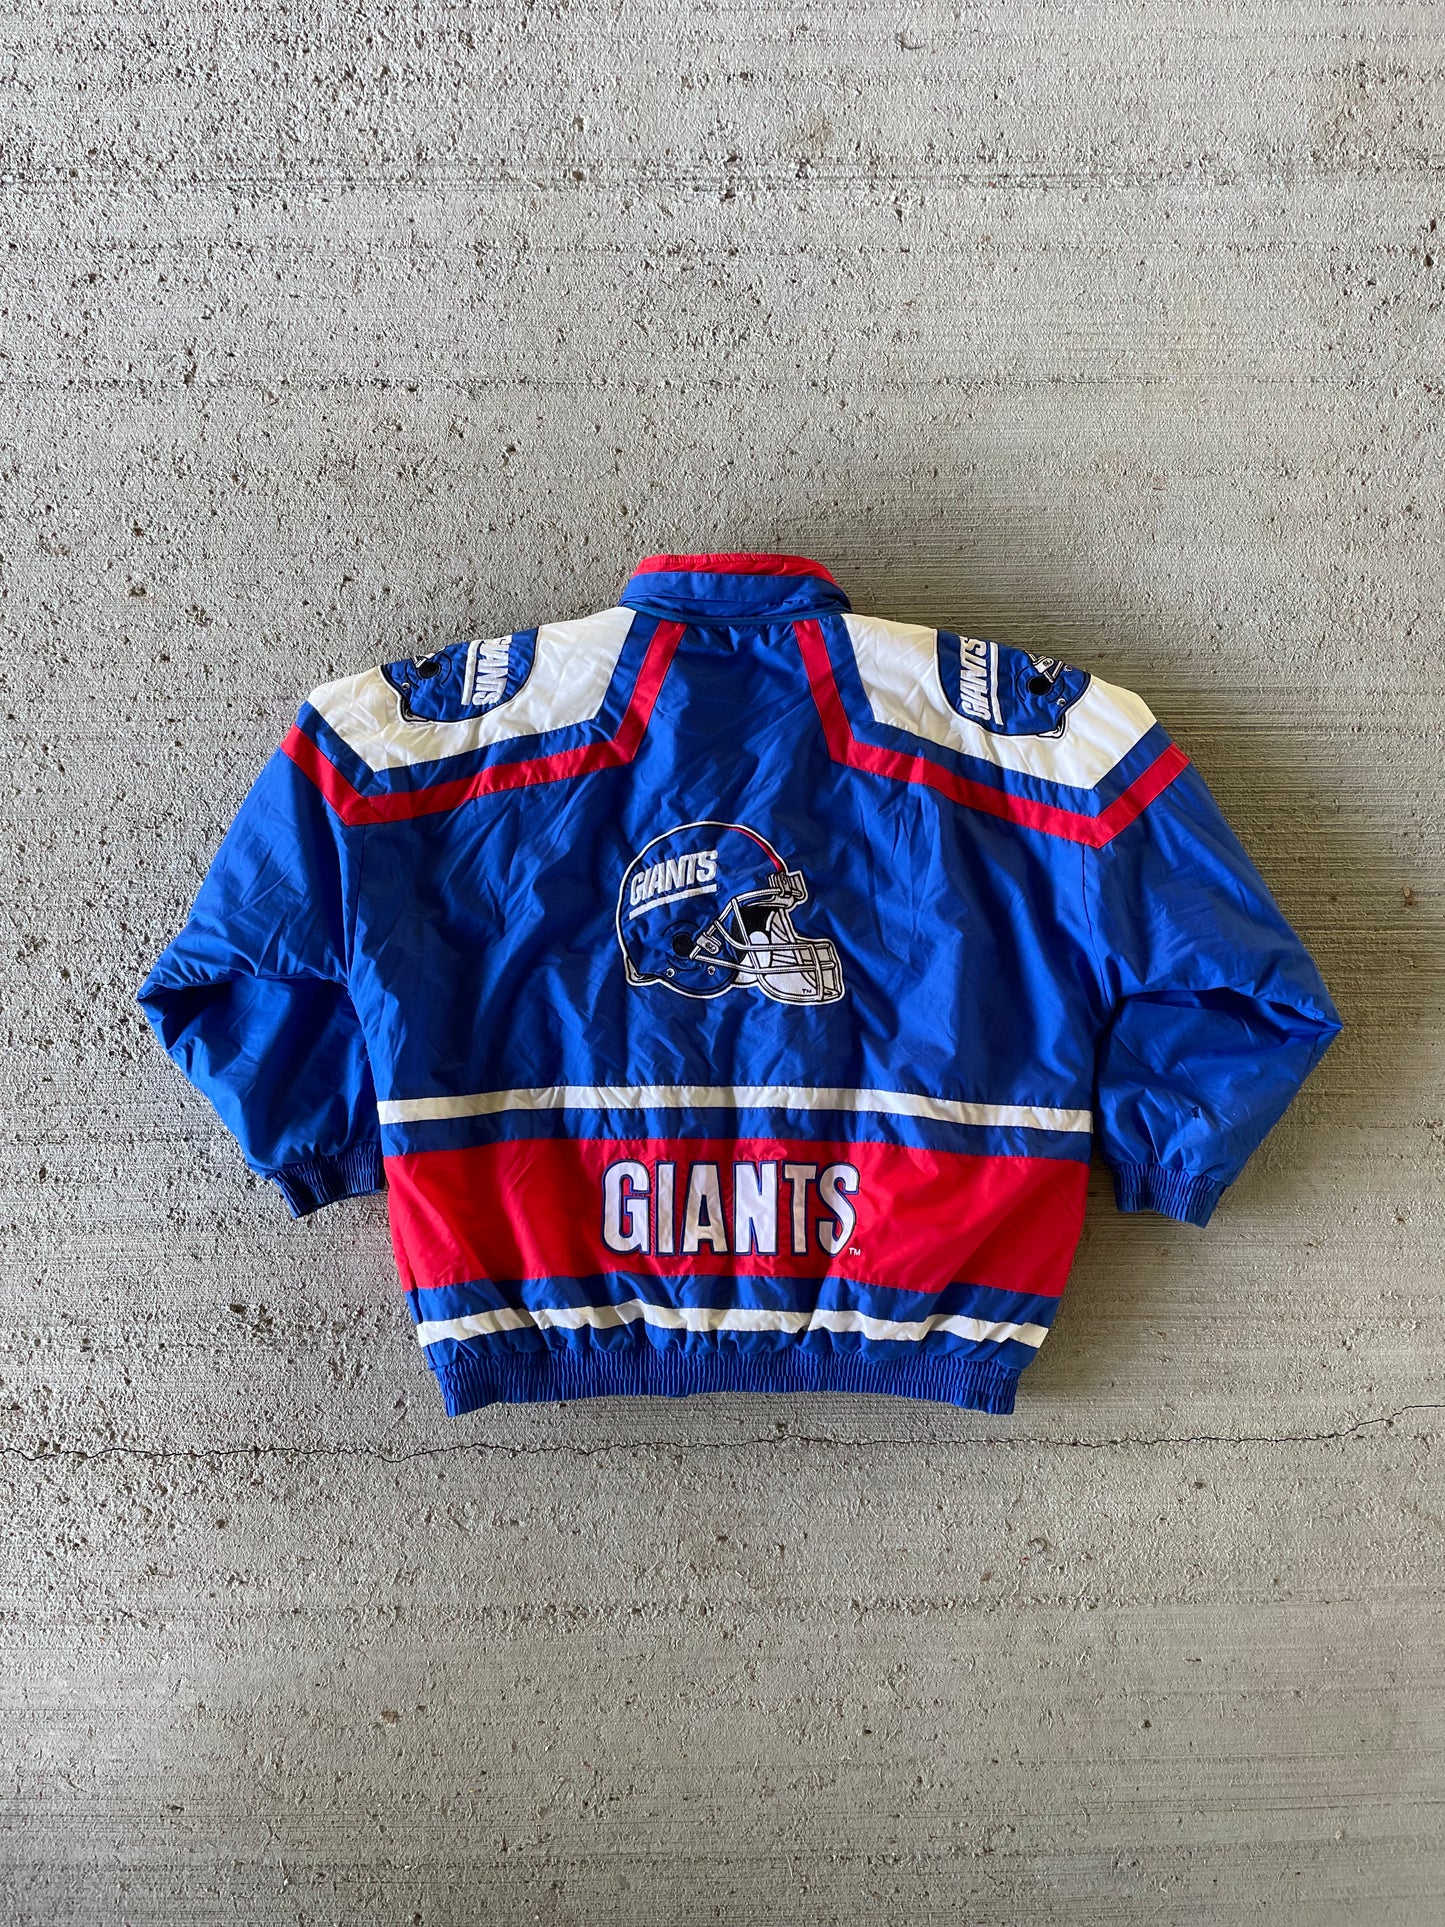 1990s New York Giants Apex Pro Line Jacket